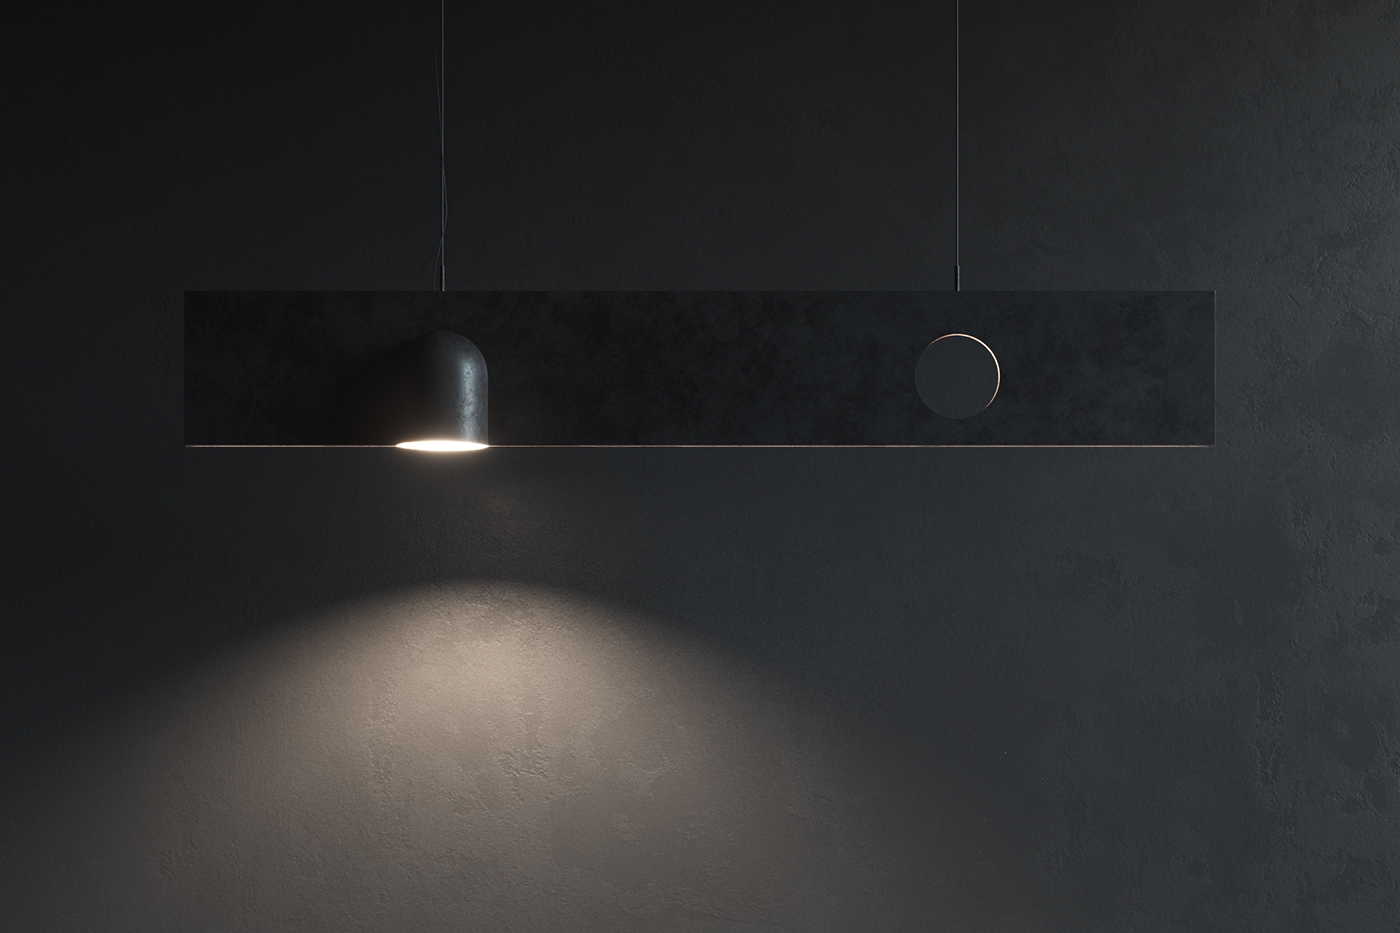 light makhno pendant Lamp steel darck material inspiration design architecture